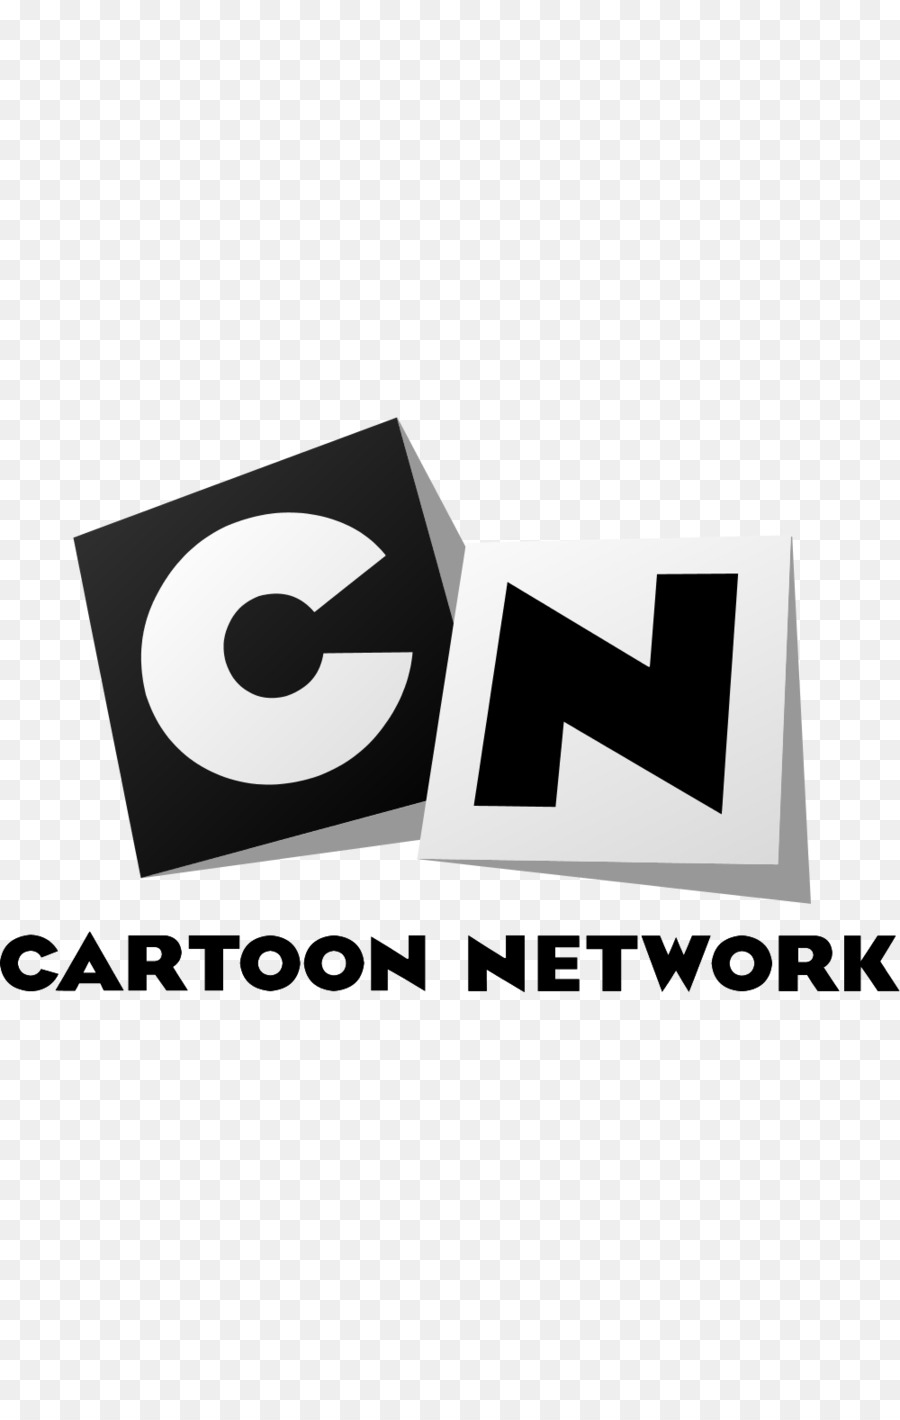 Cartoon Network Studios TV show - Cartoon Network